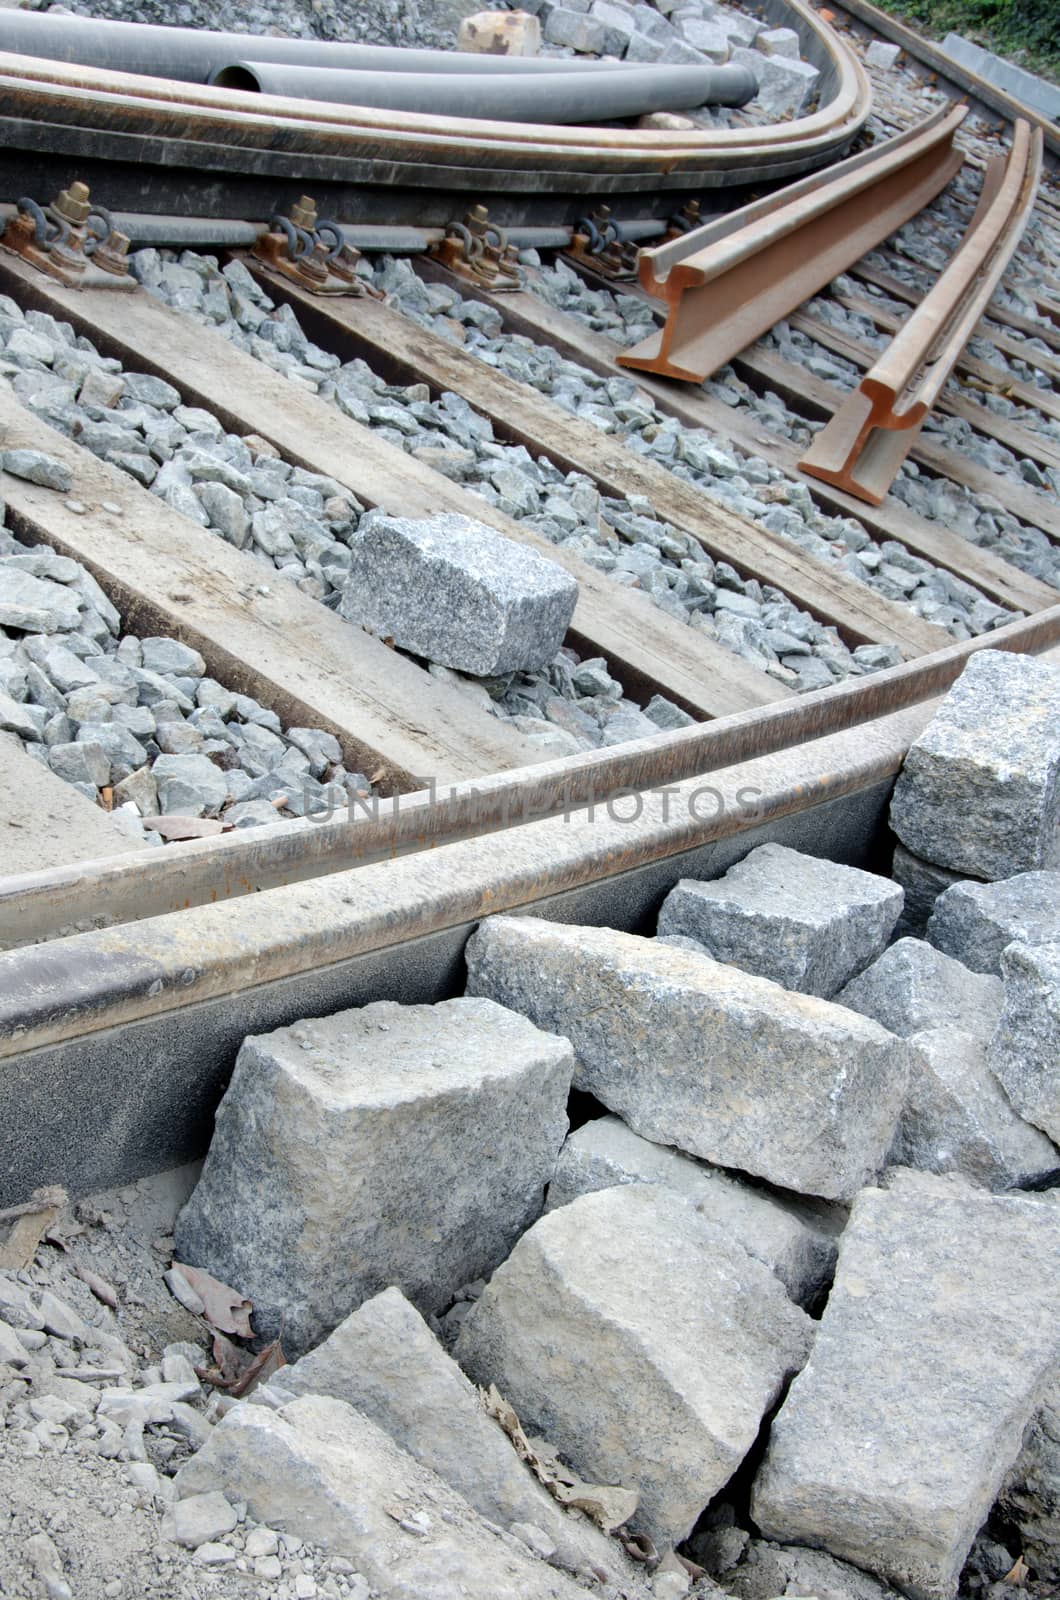 Repairing tram track, stone blocks and pipes.